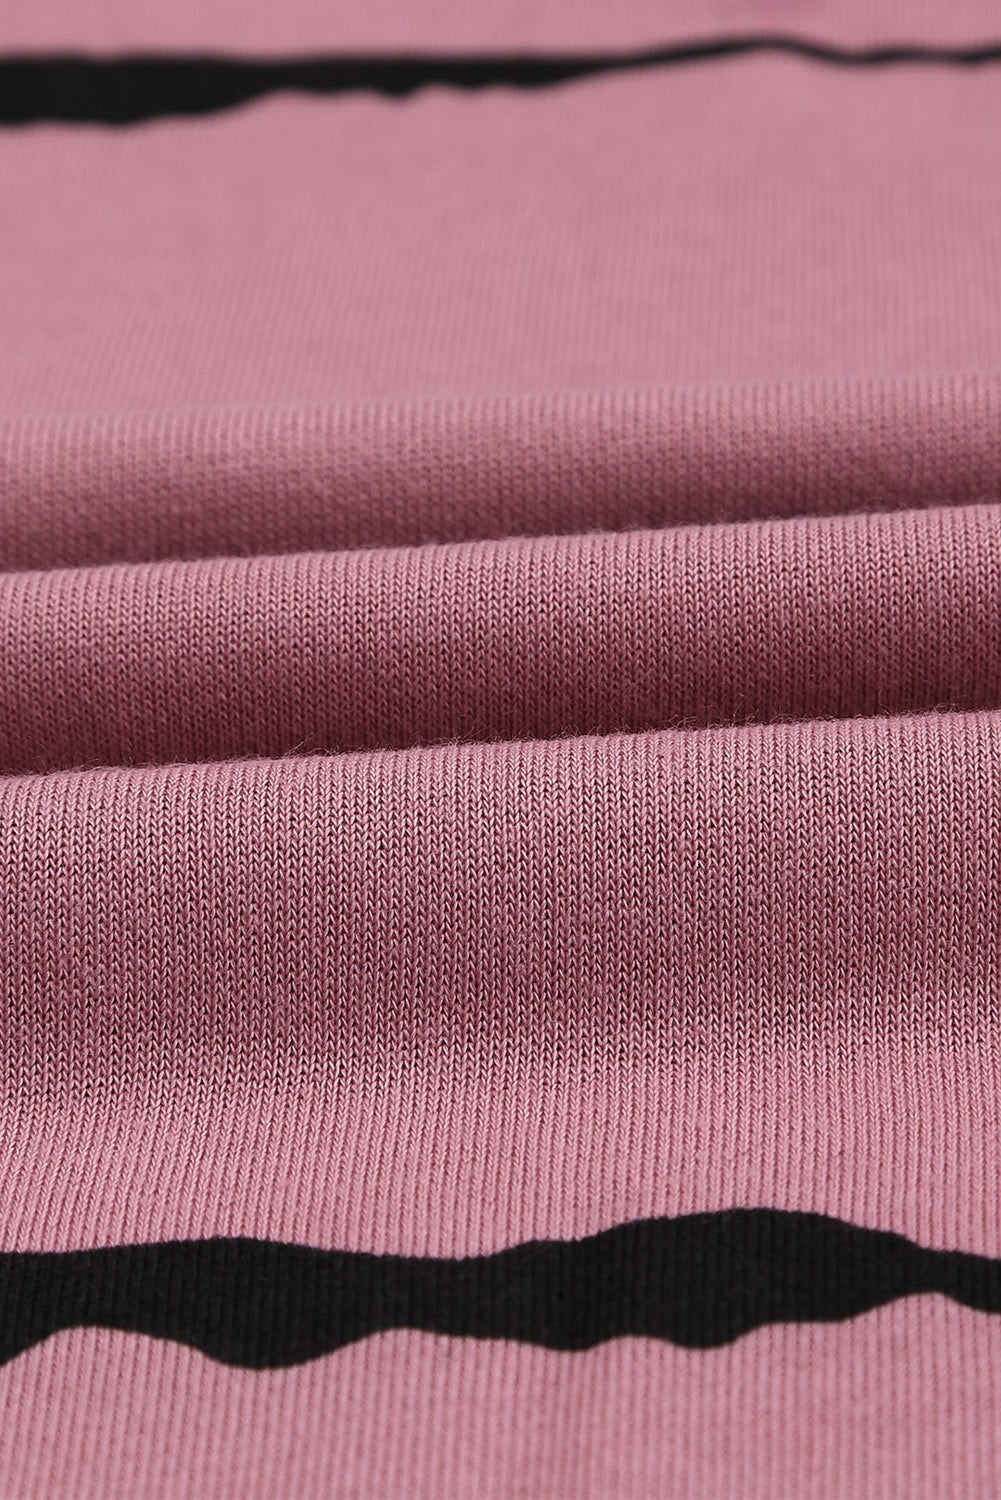 Pink Tie-dye Striped Drawstring Hoodie with Side Split Tops